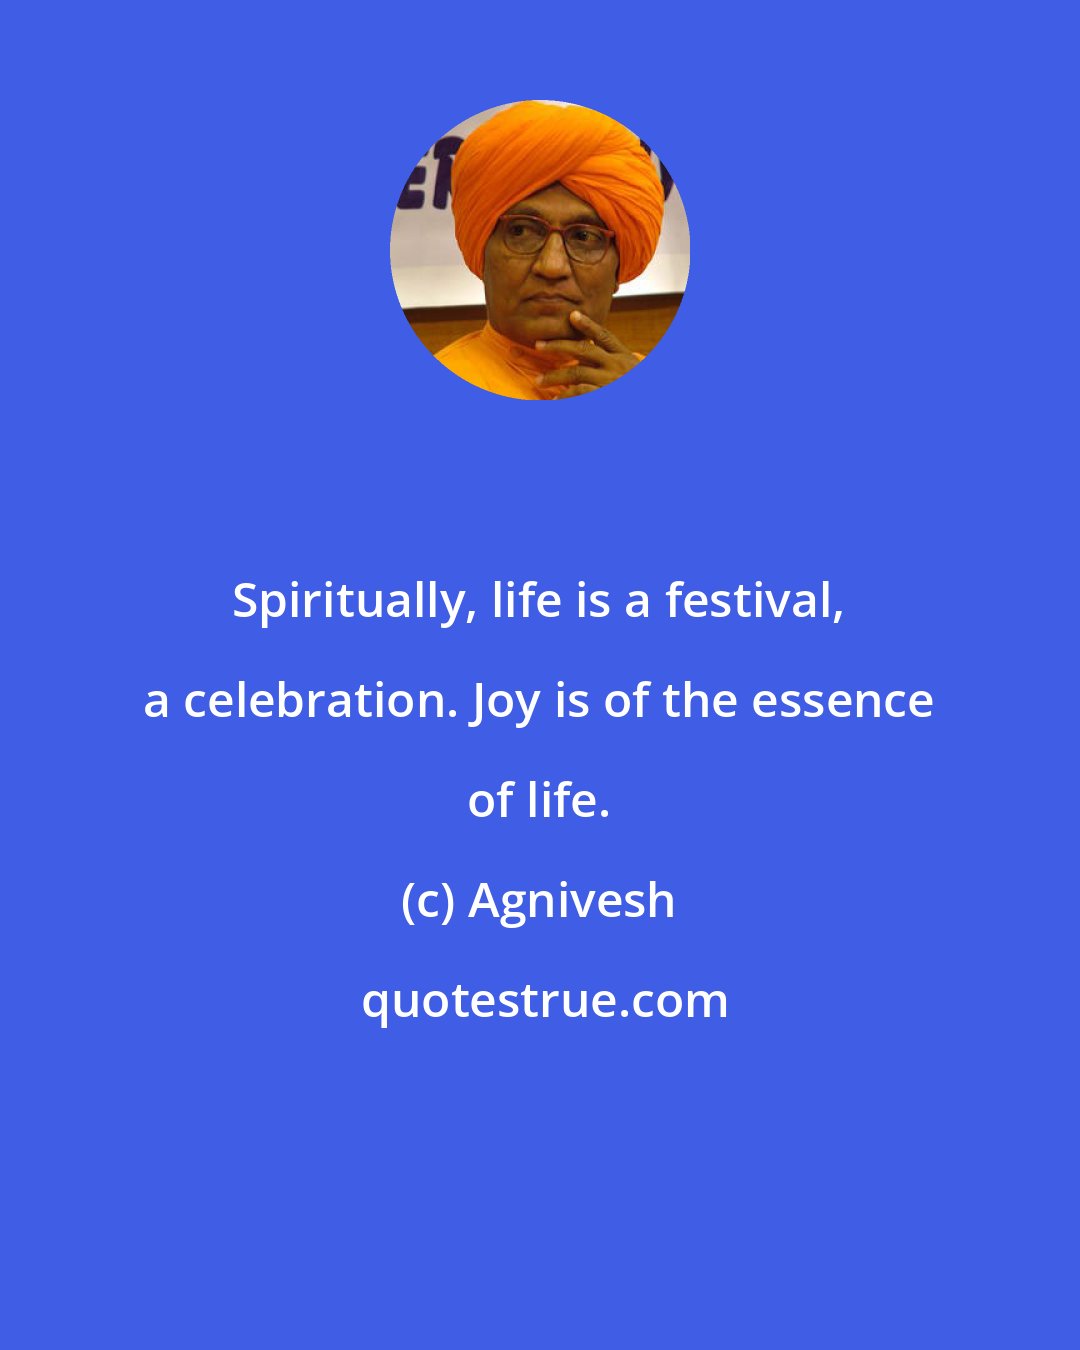 Agnivesh: Spiritually, life is a festival, a celebration. Joy is of the essence of life.